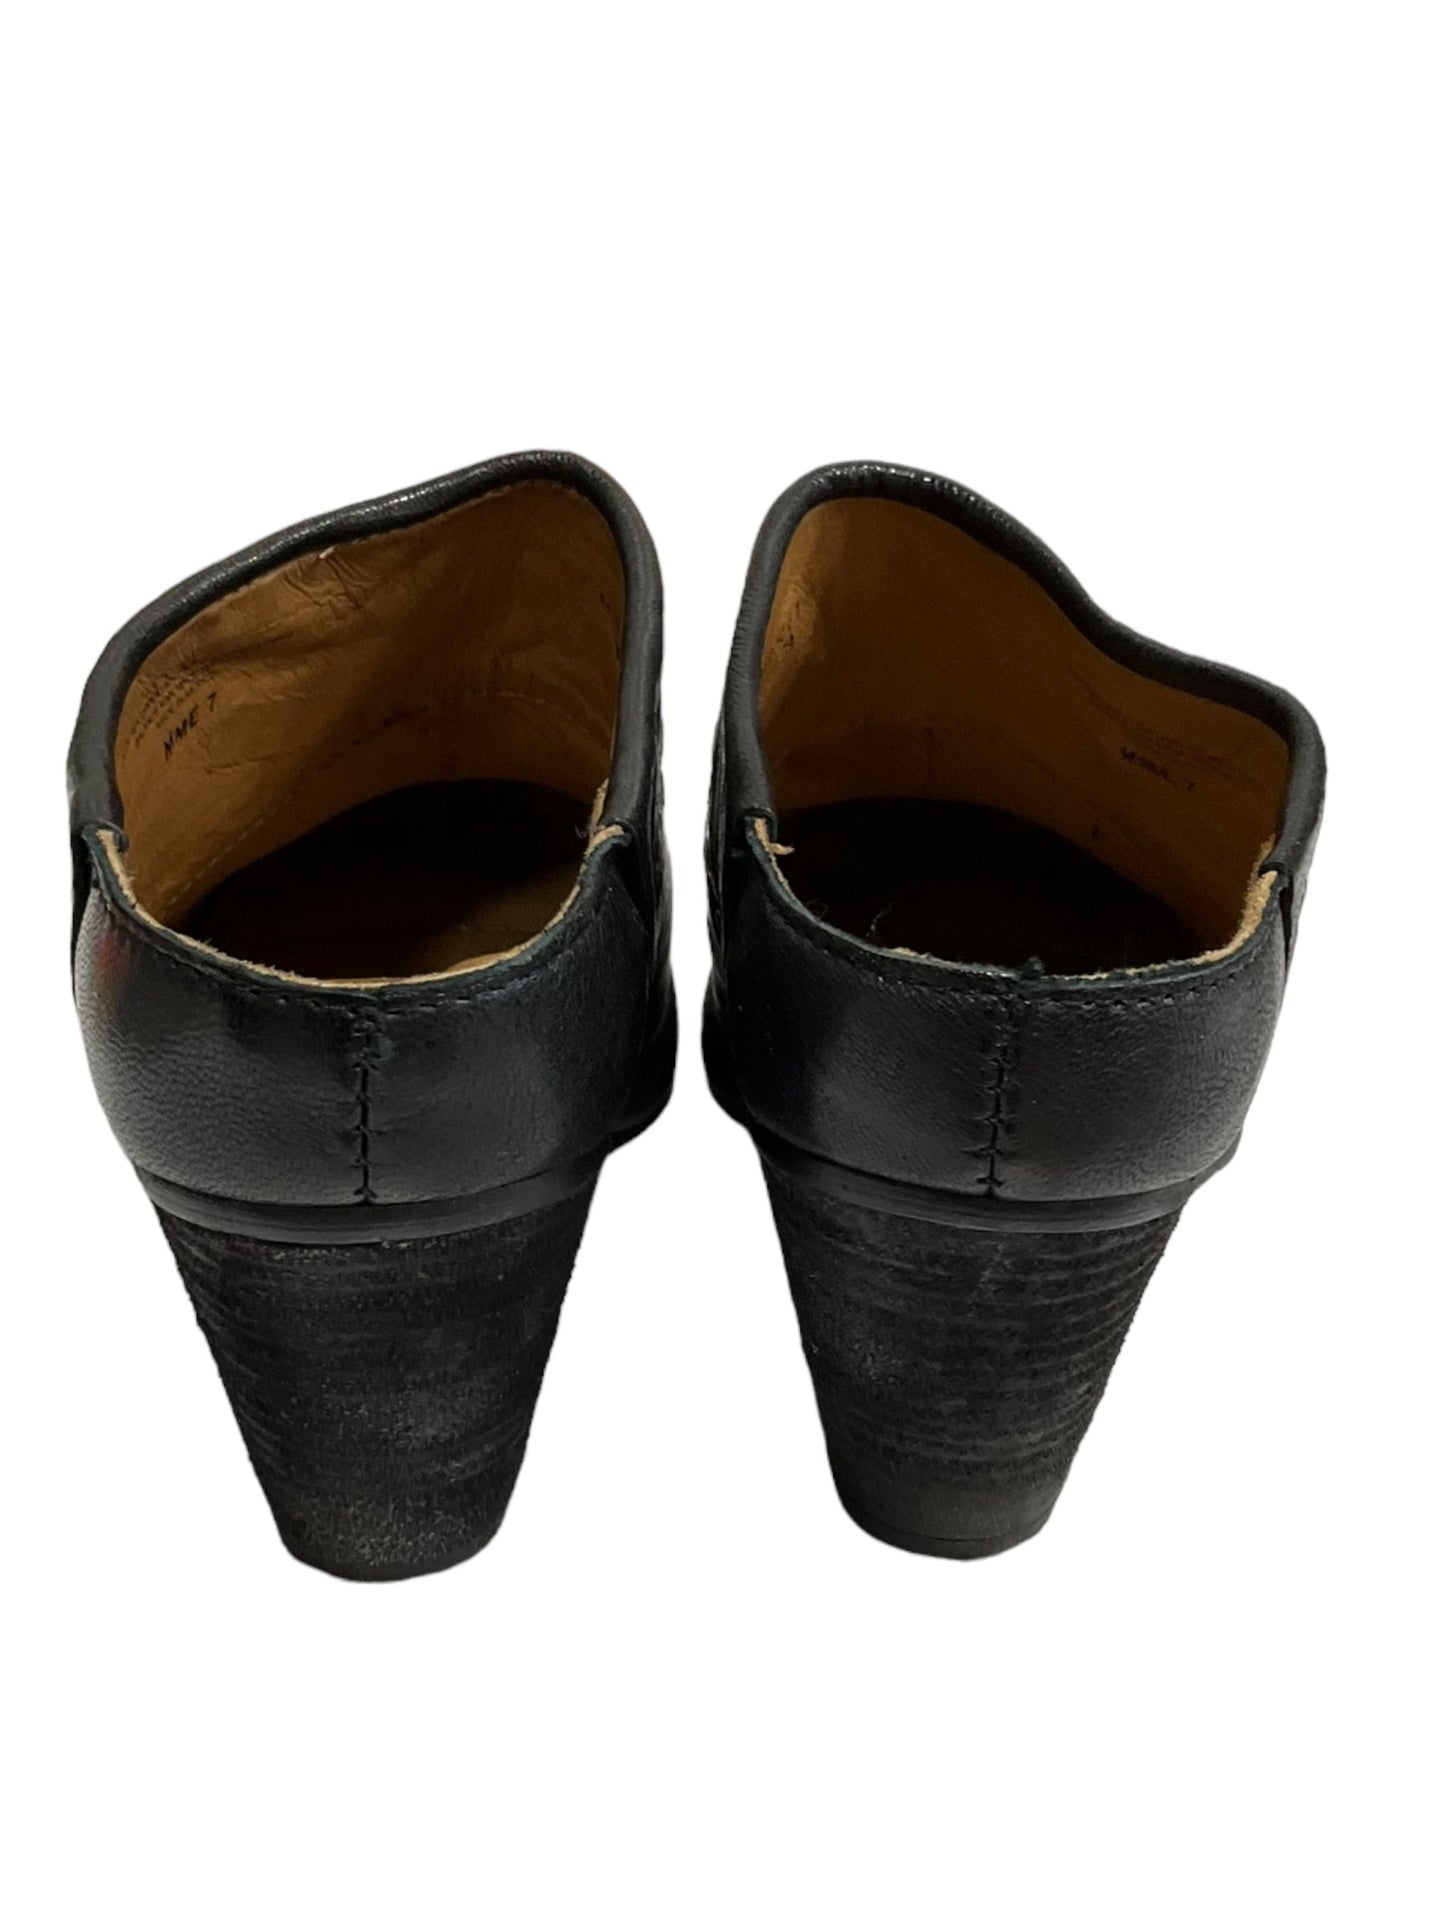 Black Shoes Heels Block Sofft, Size 7